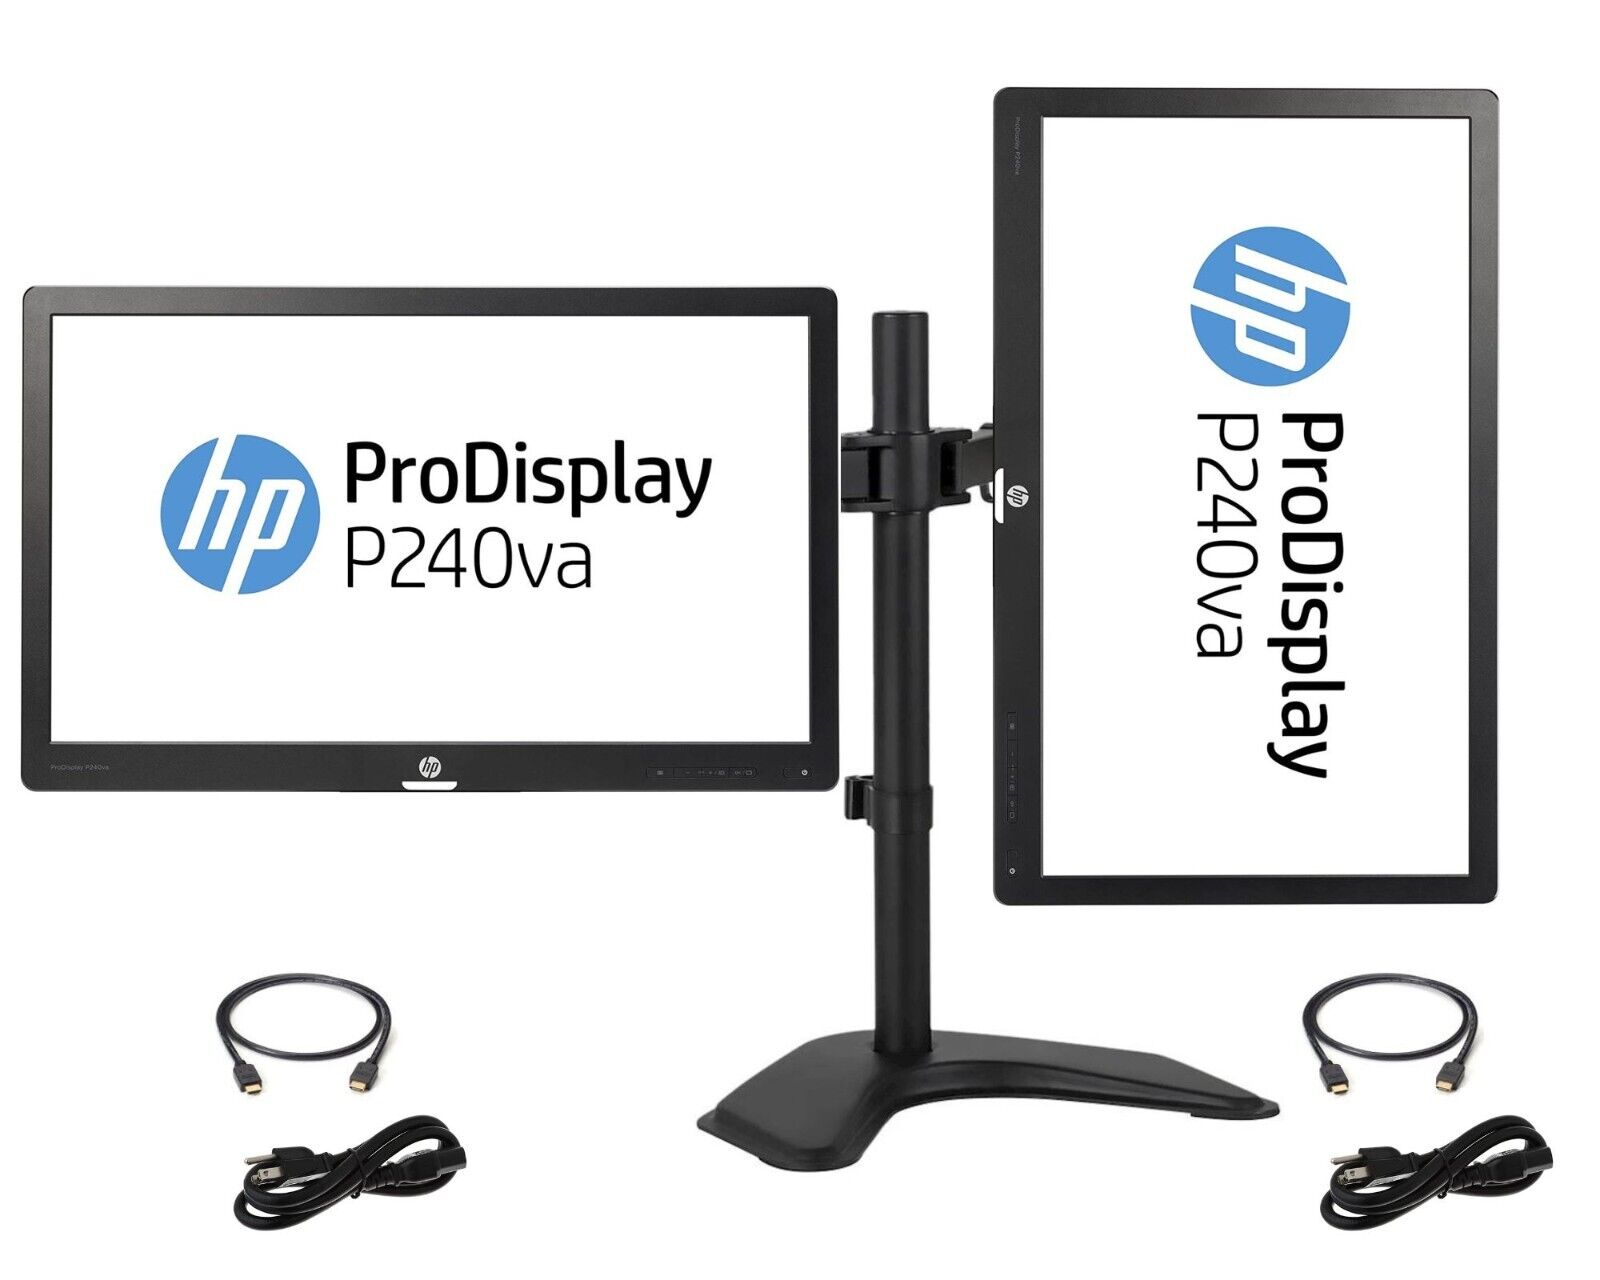 2x HP ProDisplay P240va 24inch 1080P LCD Monitors(Gra A)  W/ Dual Stand +Cables